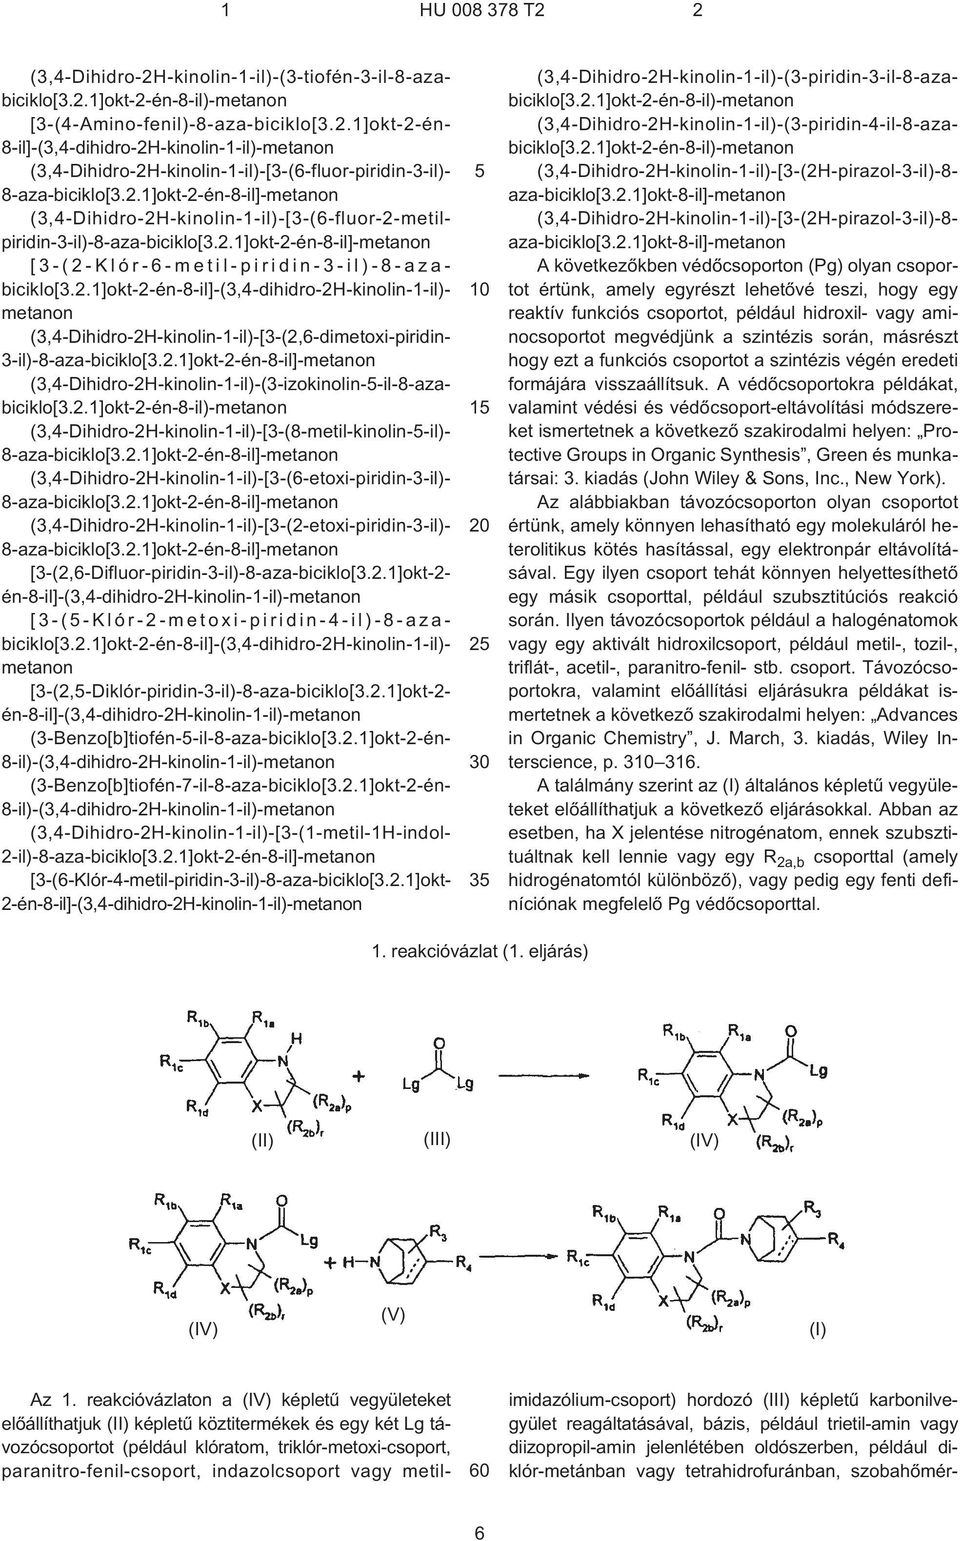 2.1]okt-2-én-8¹il]-metanon (3,4-Dihidro-2H-kinolin-1¹il)-(3¹izokinolin--il-8-azabiciklo[3.2.1]okt-2-én-8¹il)-metanon (3,4-Dihidro-2H-kinolin-1¹il)-[3¹(8¹metil-kinolin-¹il)- 8-aza-biciklo[3.2.1]okt-2-én-8¹il]-metanon (3,4-Dihidro-2H-kinolin-1¹il)-[3¹(6¹etoxi-piridin-3¹il)- 8-aza-biciklo[3.